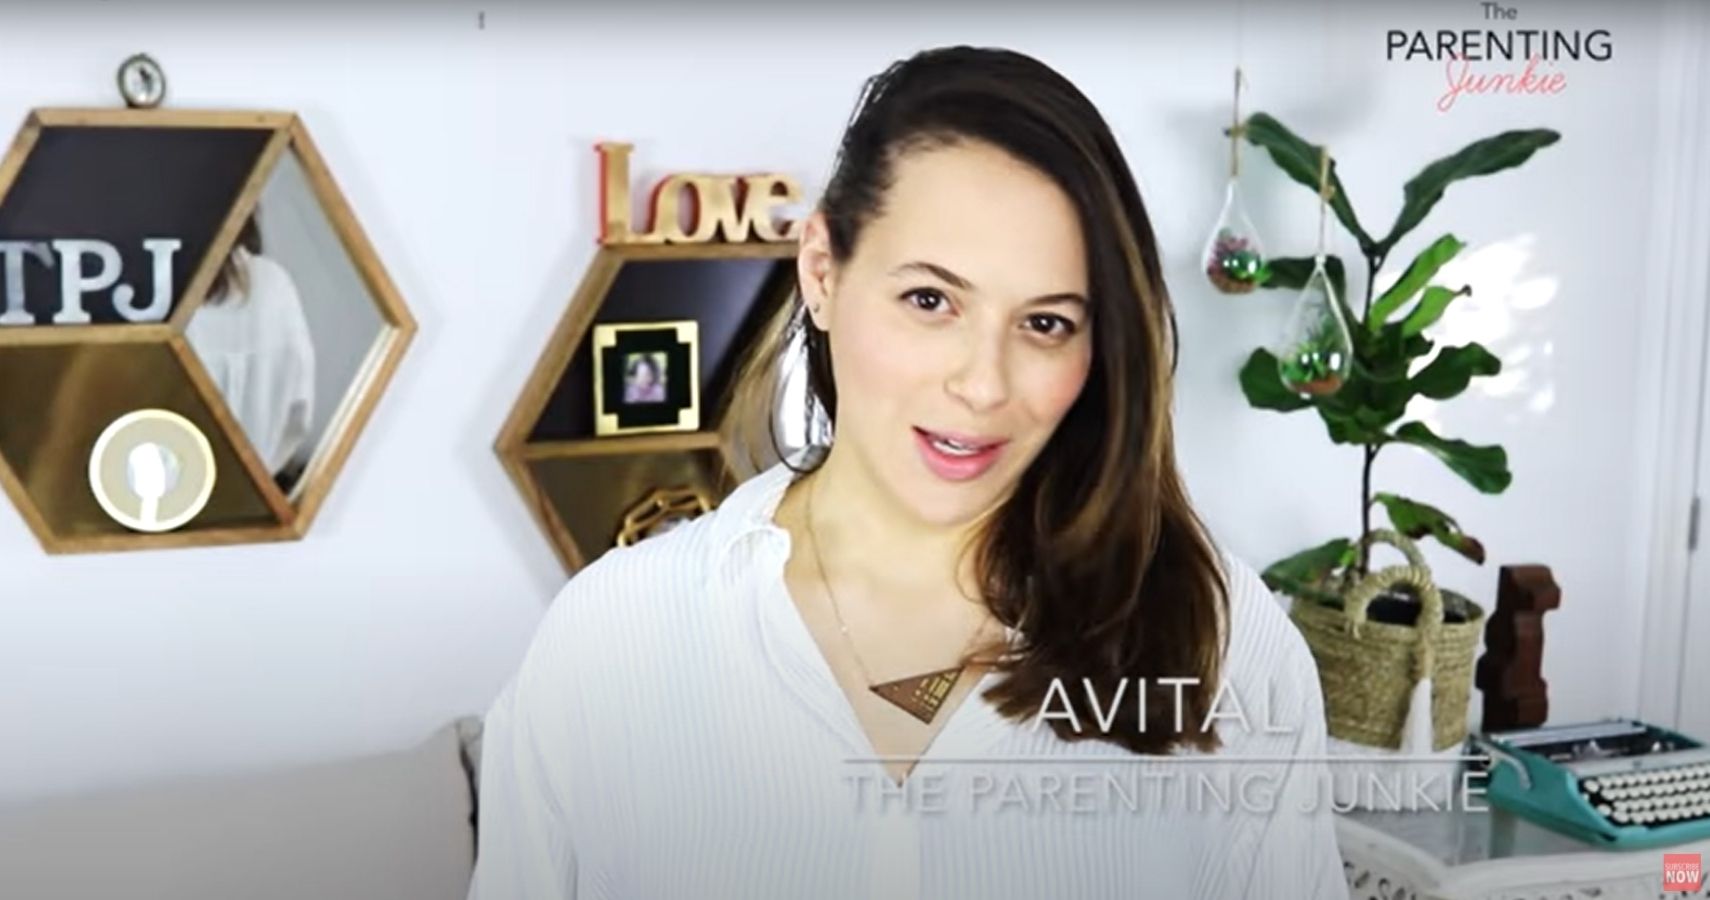 Avital the Parenting Junkie best videos